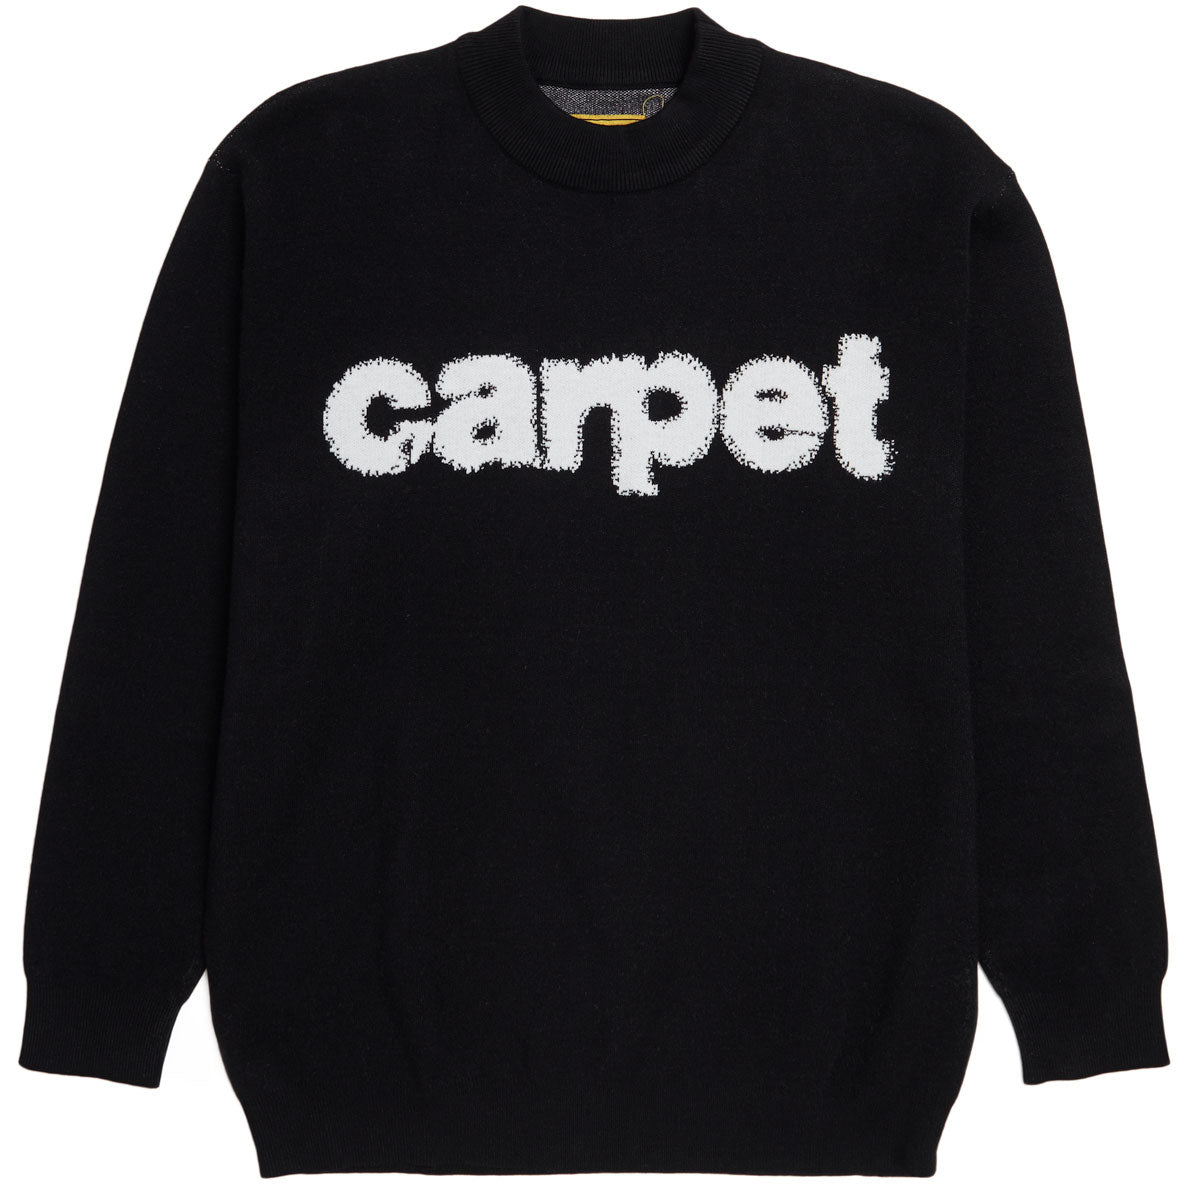 Carpet Company Woven Sweater - Black image 1